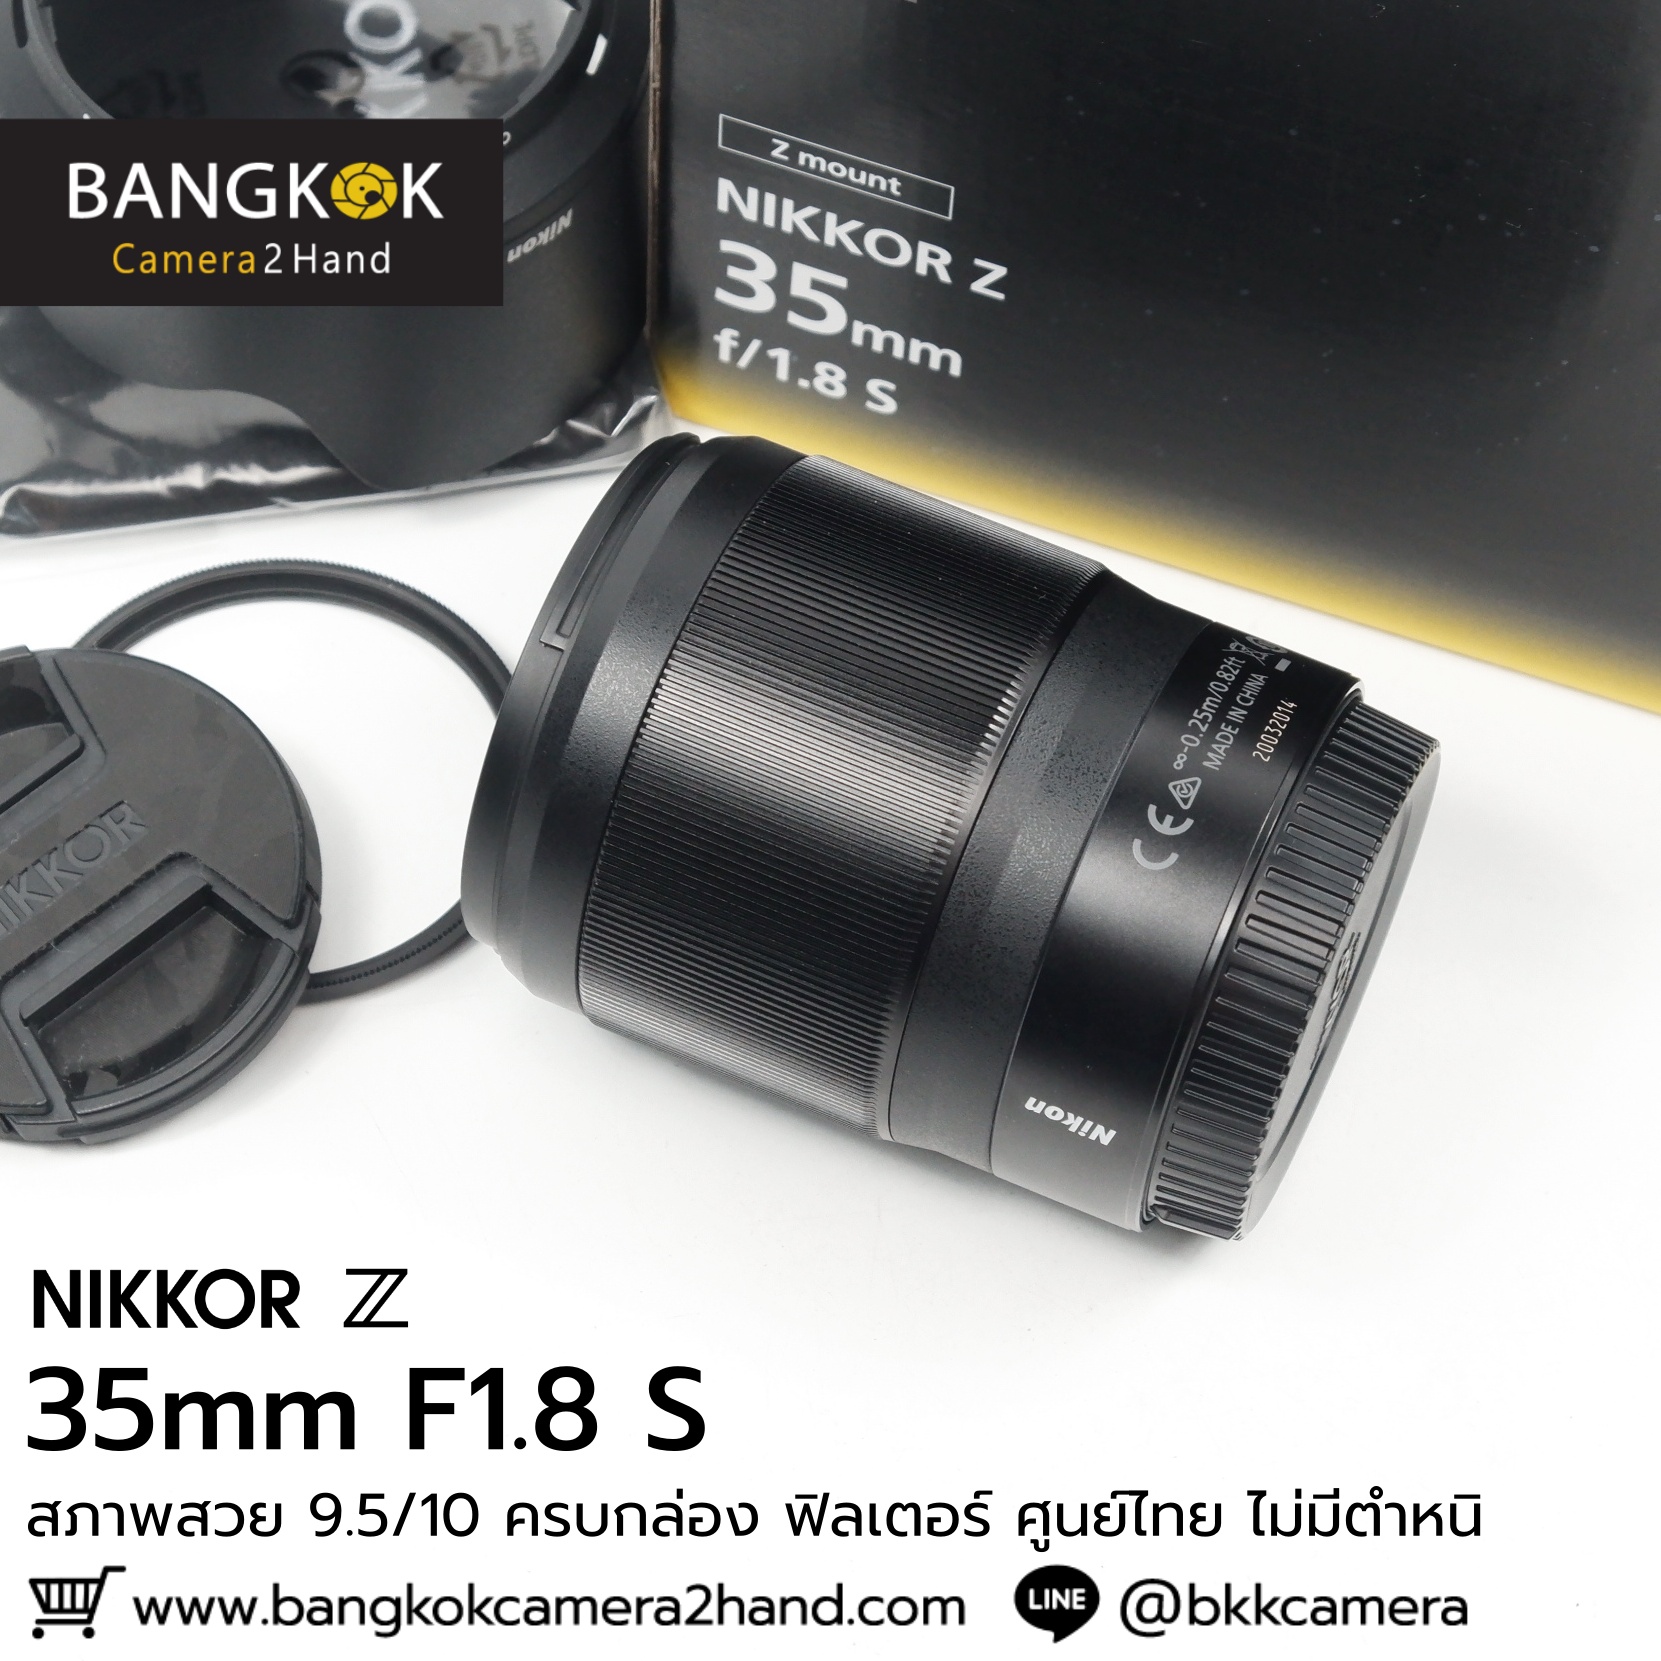 Nikkor Z 35mm F1.8 S ศูนย์ไทย มีฟิลเตอร์